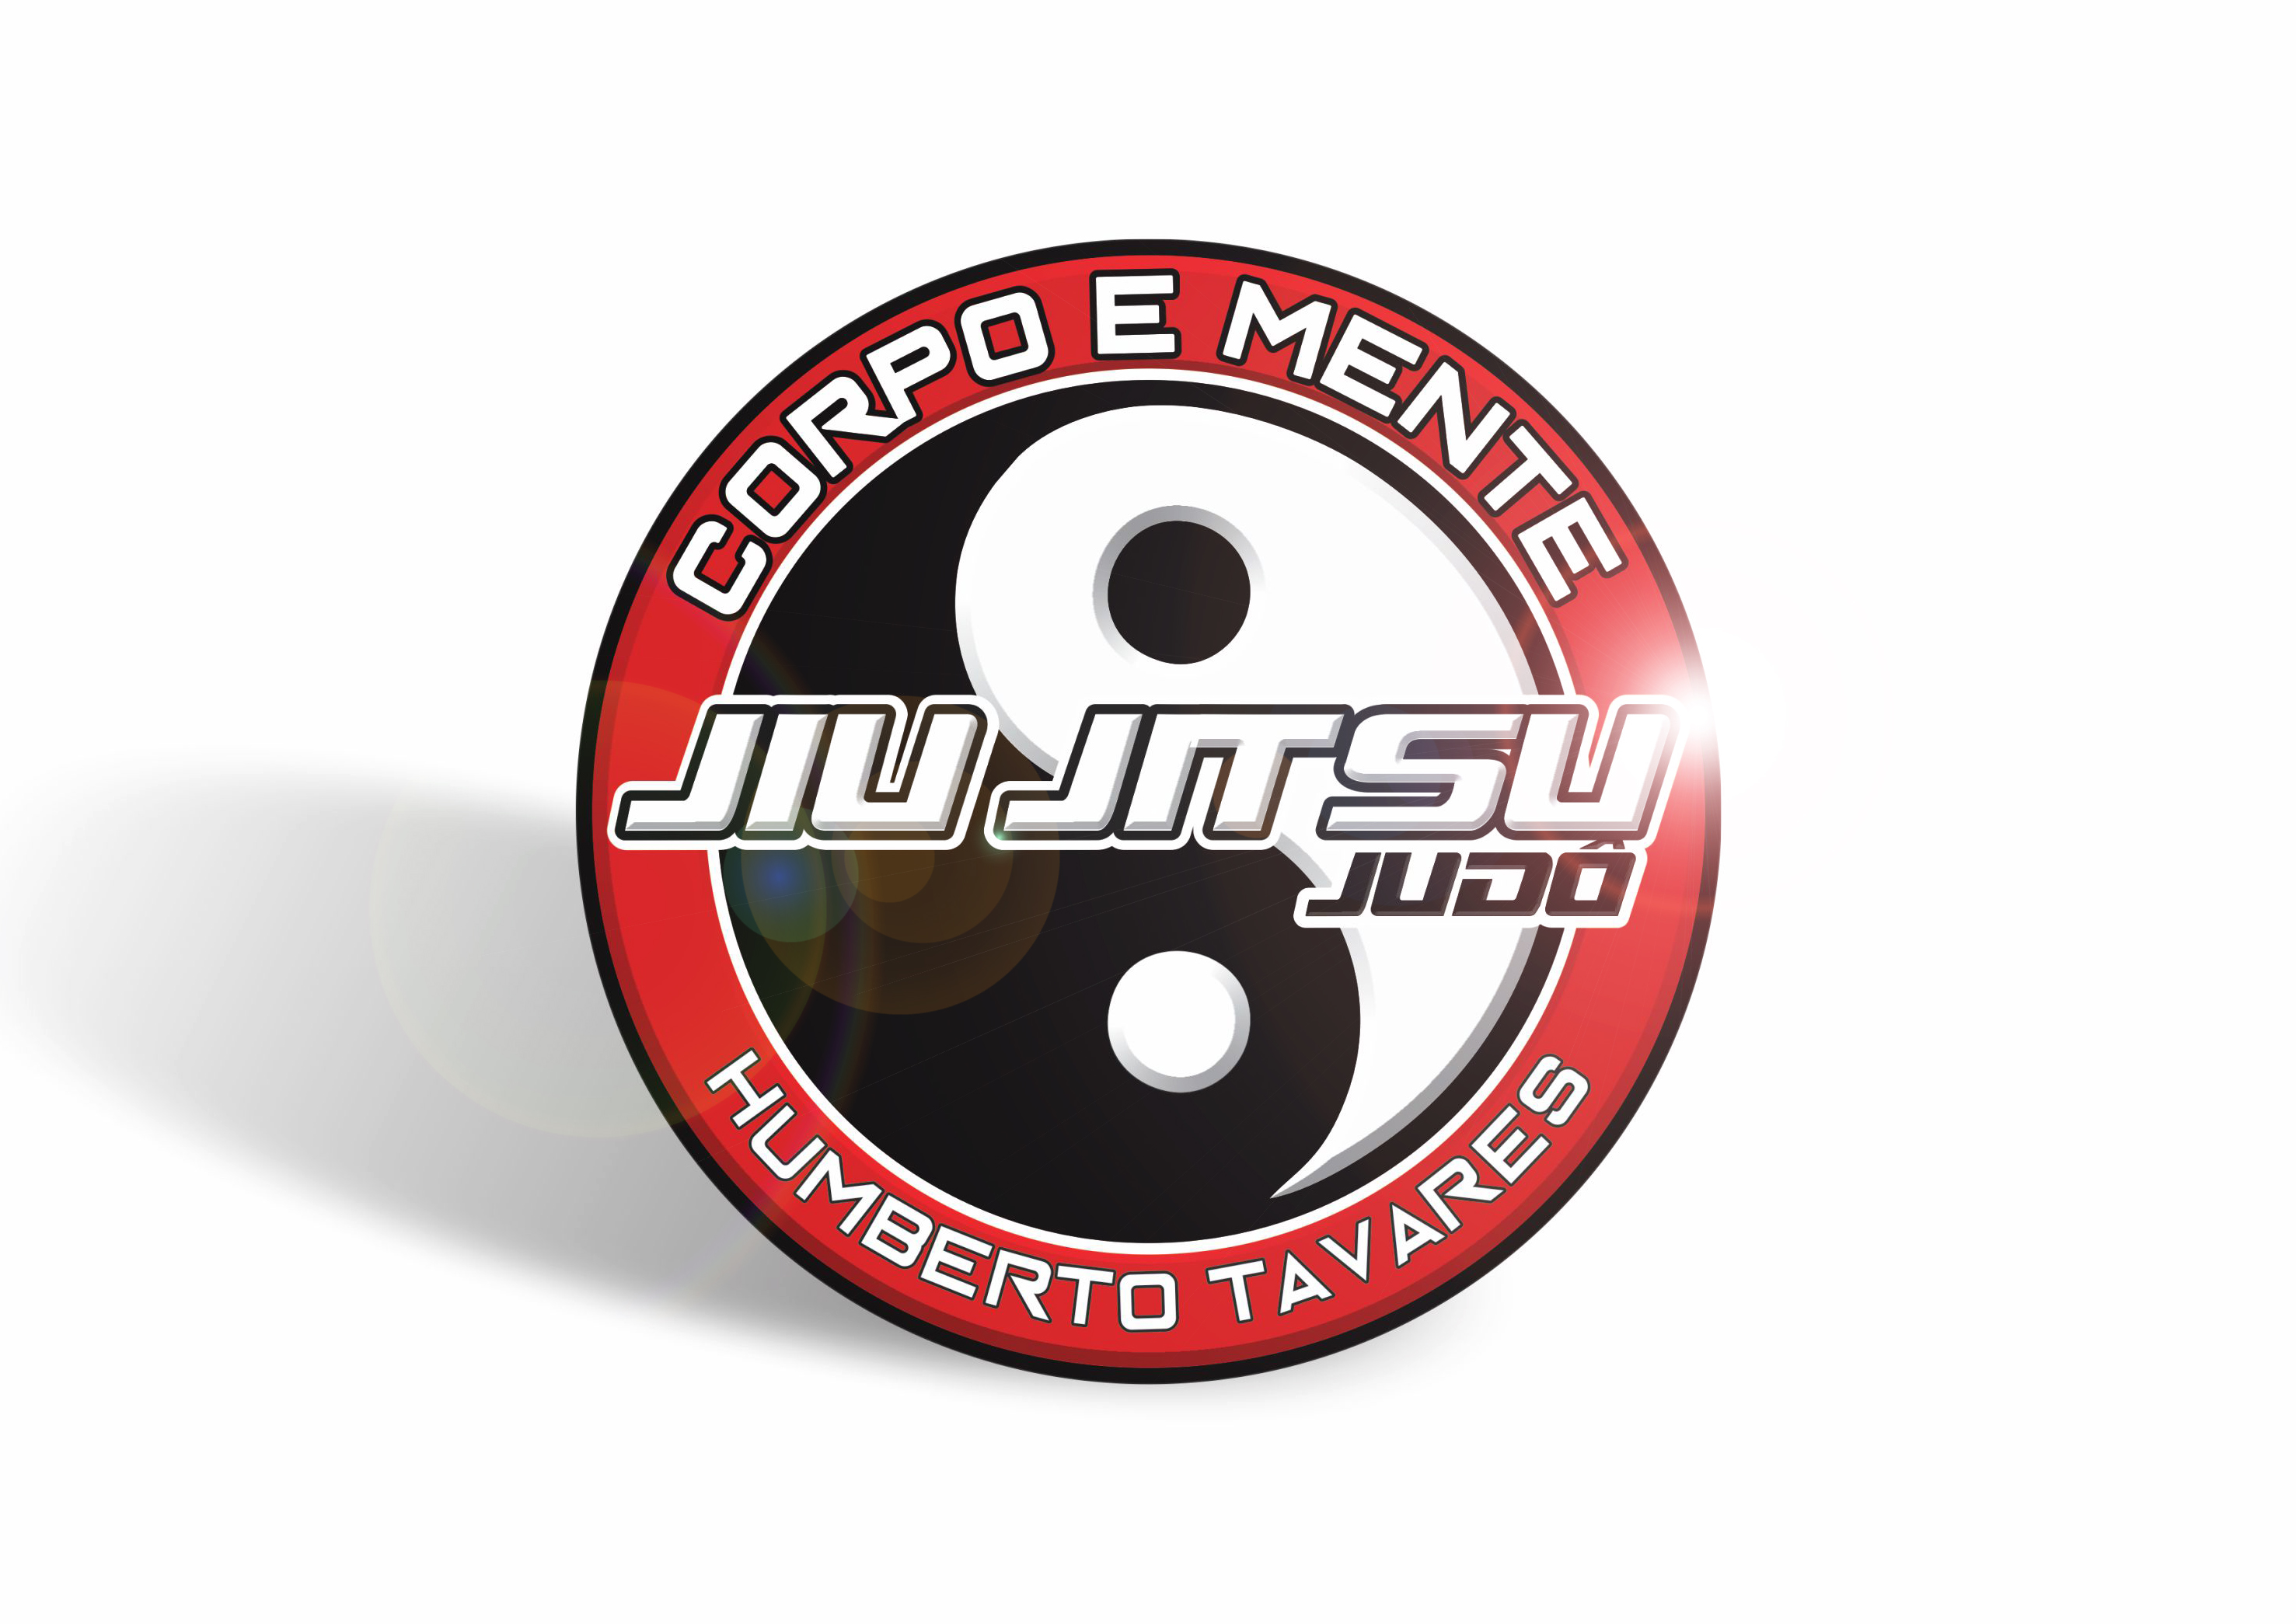 logo01.jpg